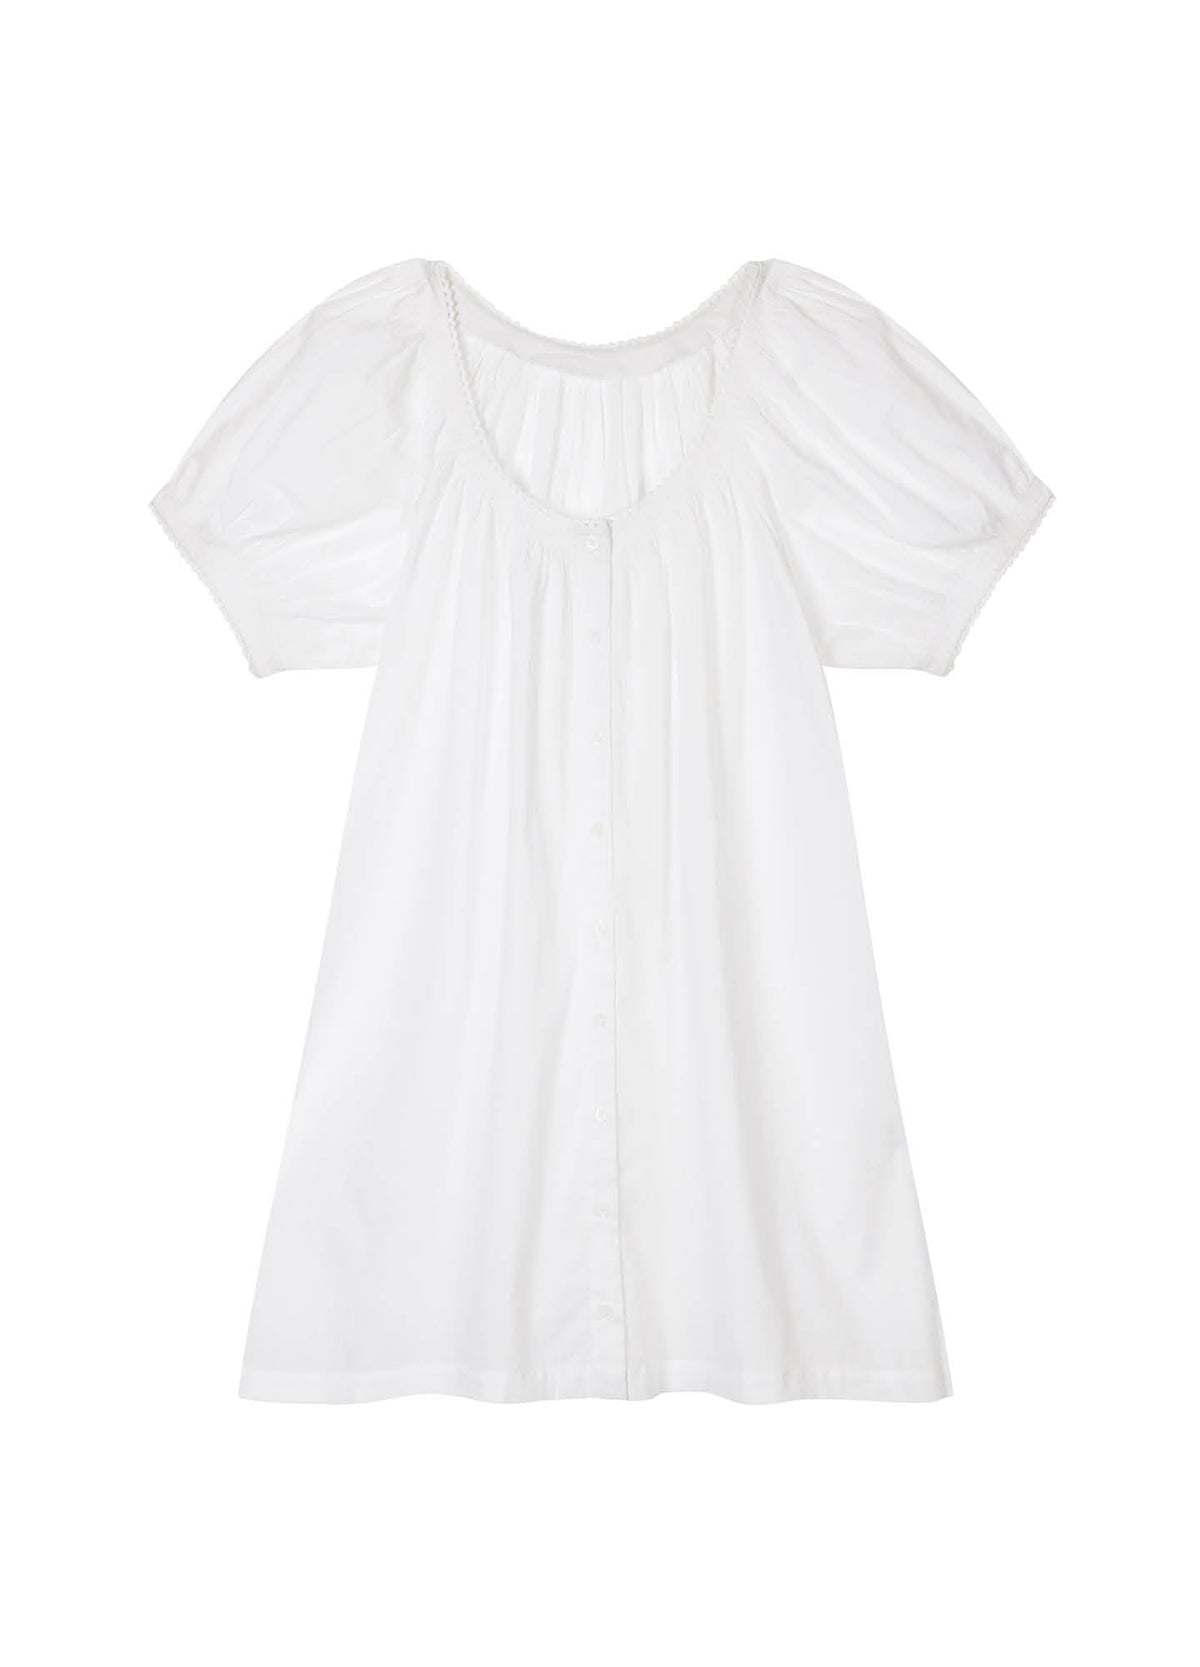 Caitlyn White Cotton Nightdress